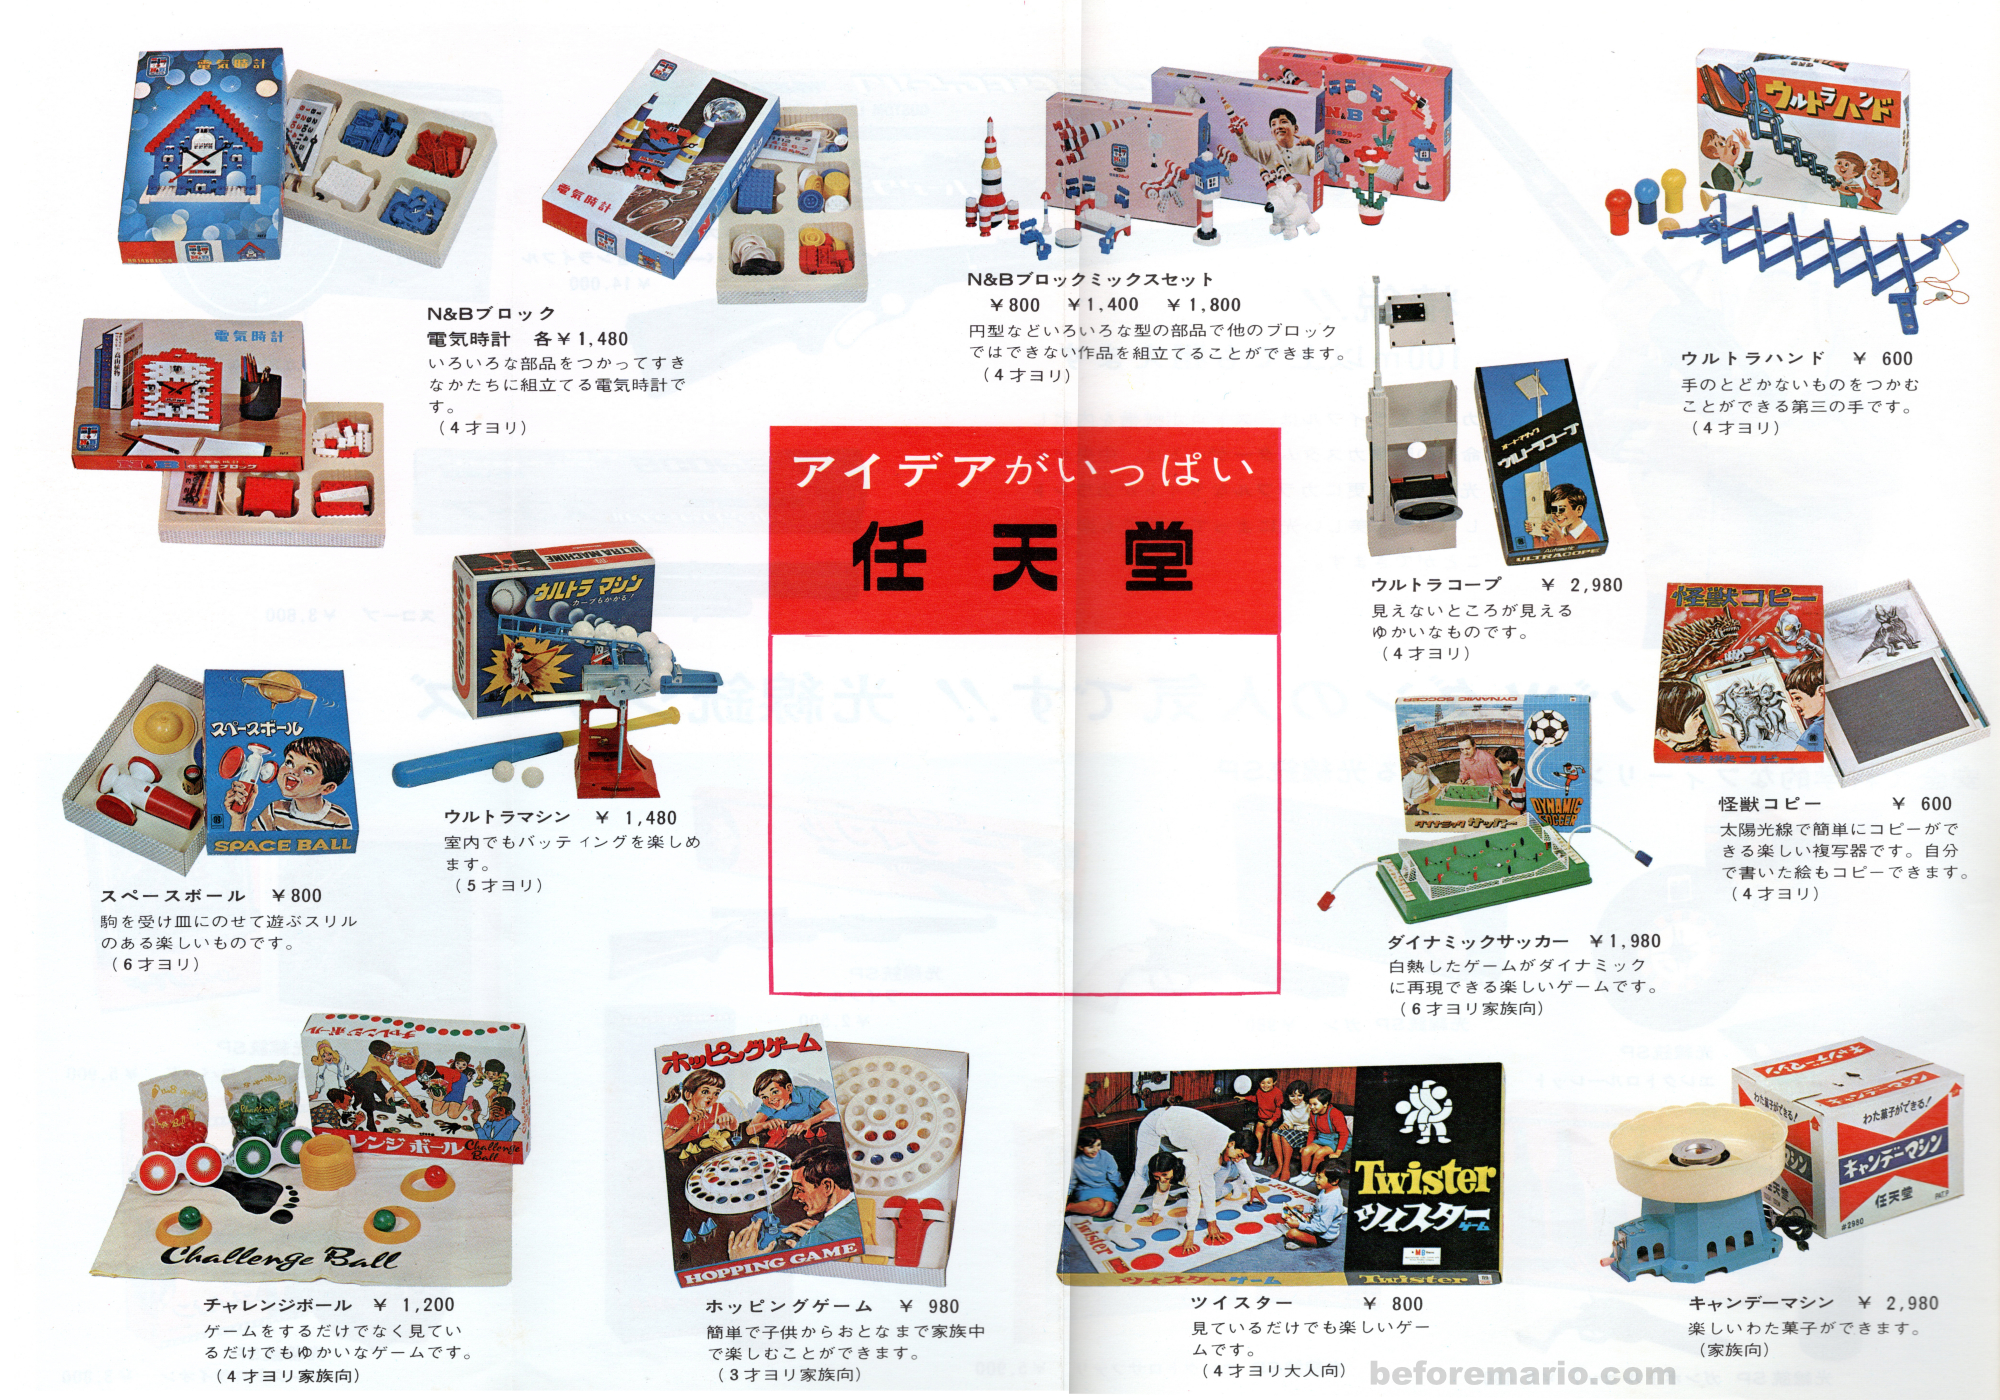 beforemario: Nintendo Love Tester sold in 1971 in USA